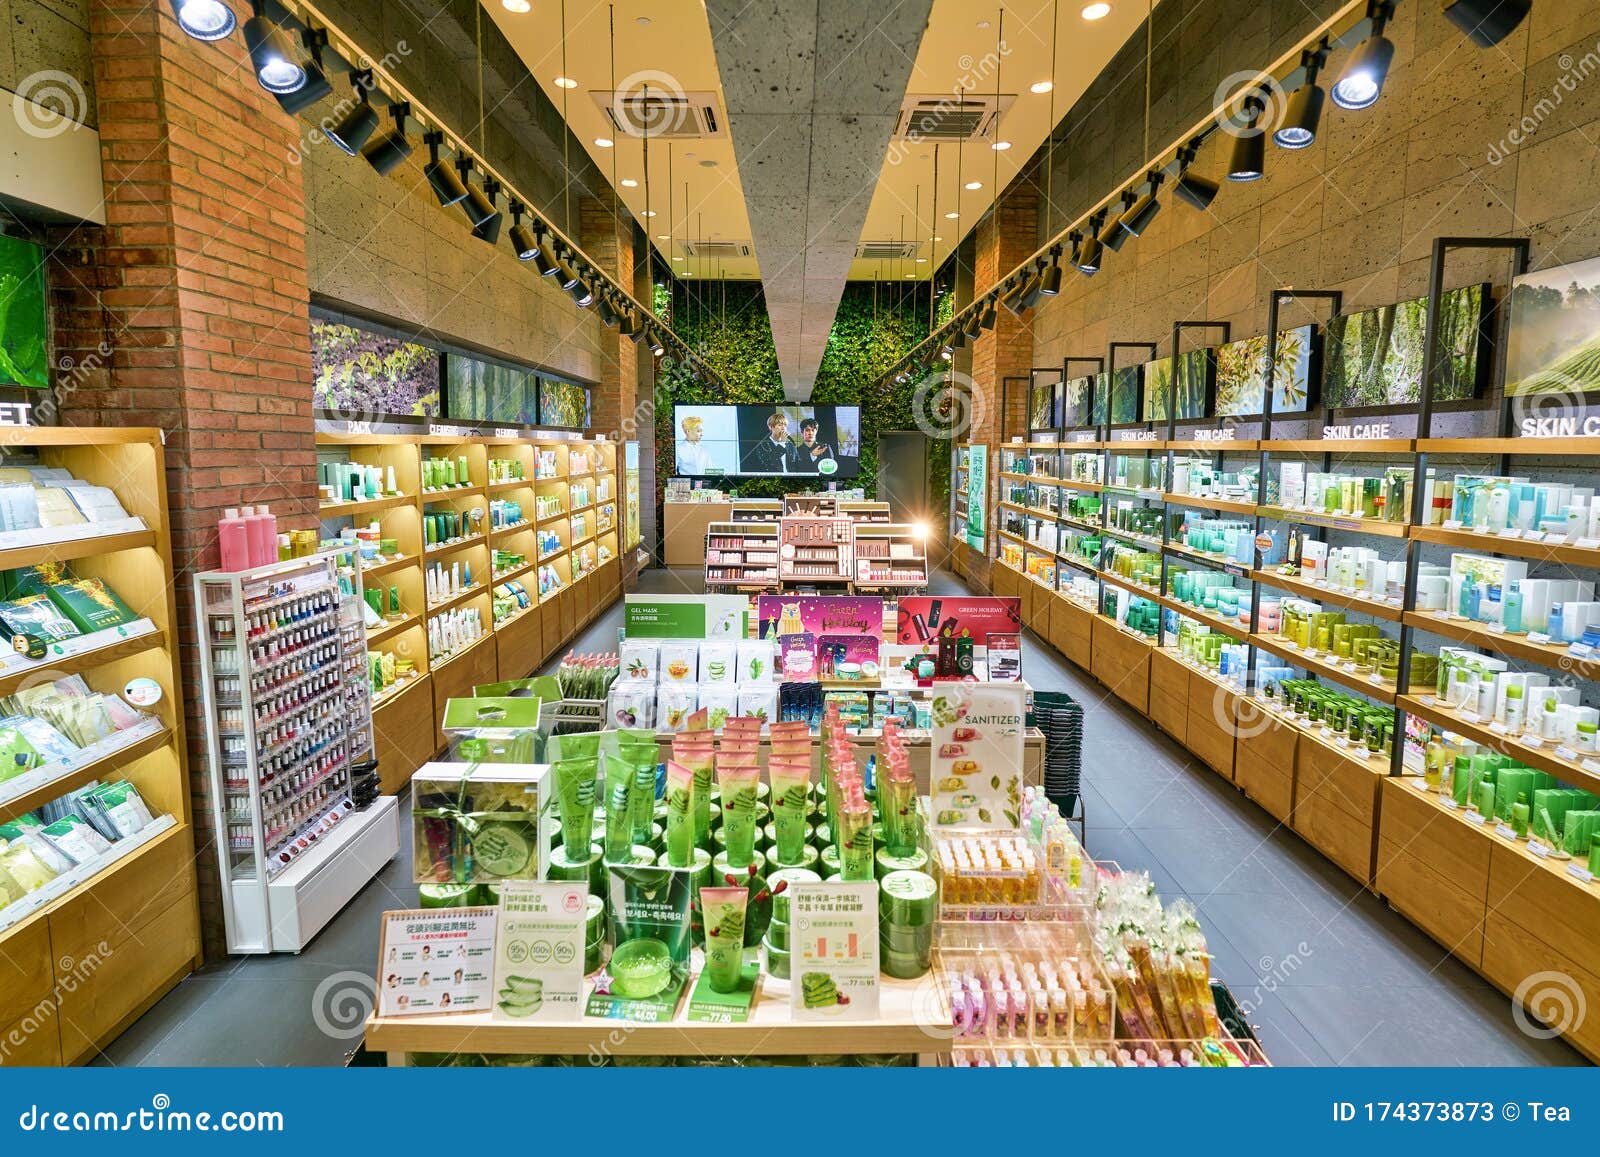 Nature Republic Store in Hong Kong Editorial Stock Photo Image of interior, nature: 174373873